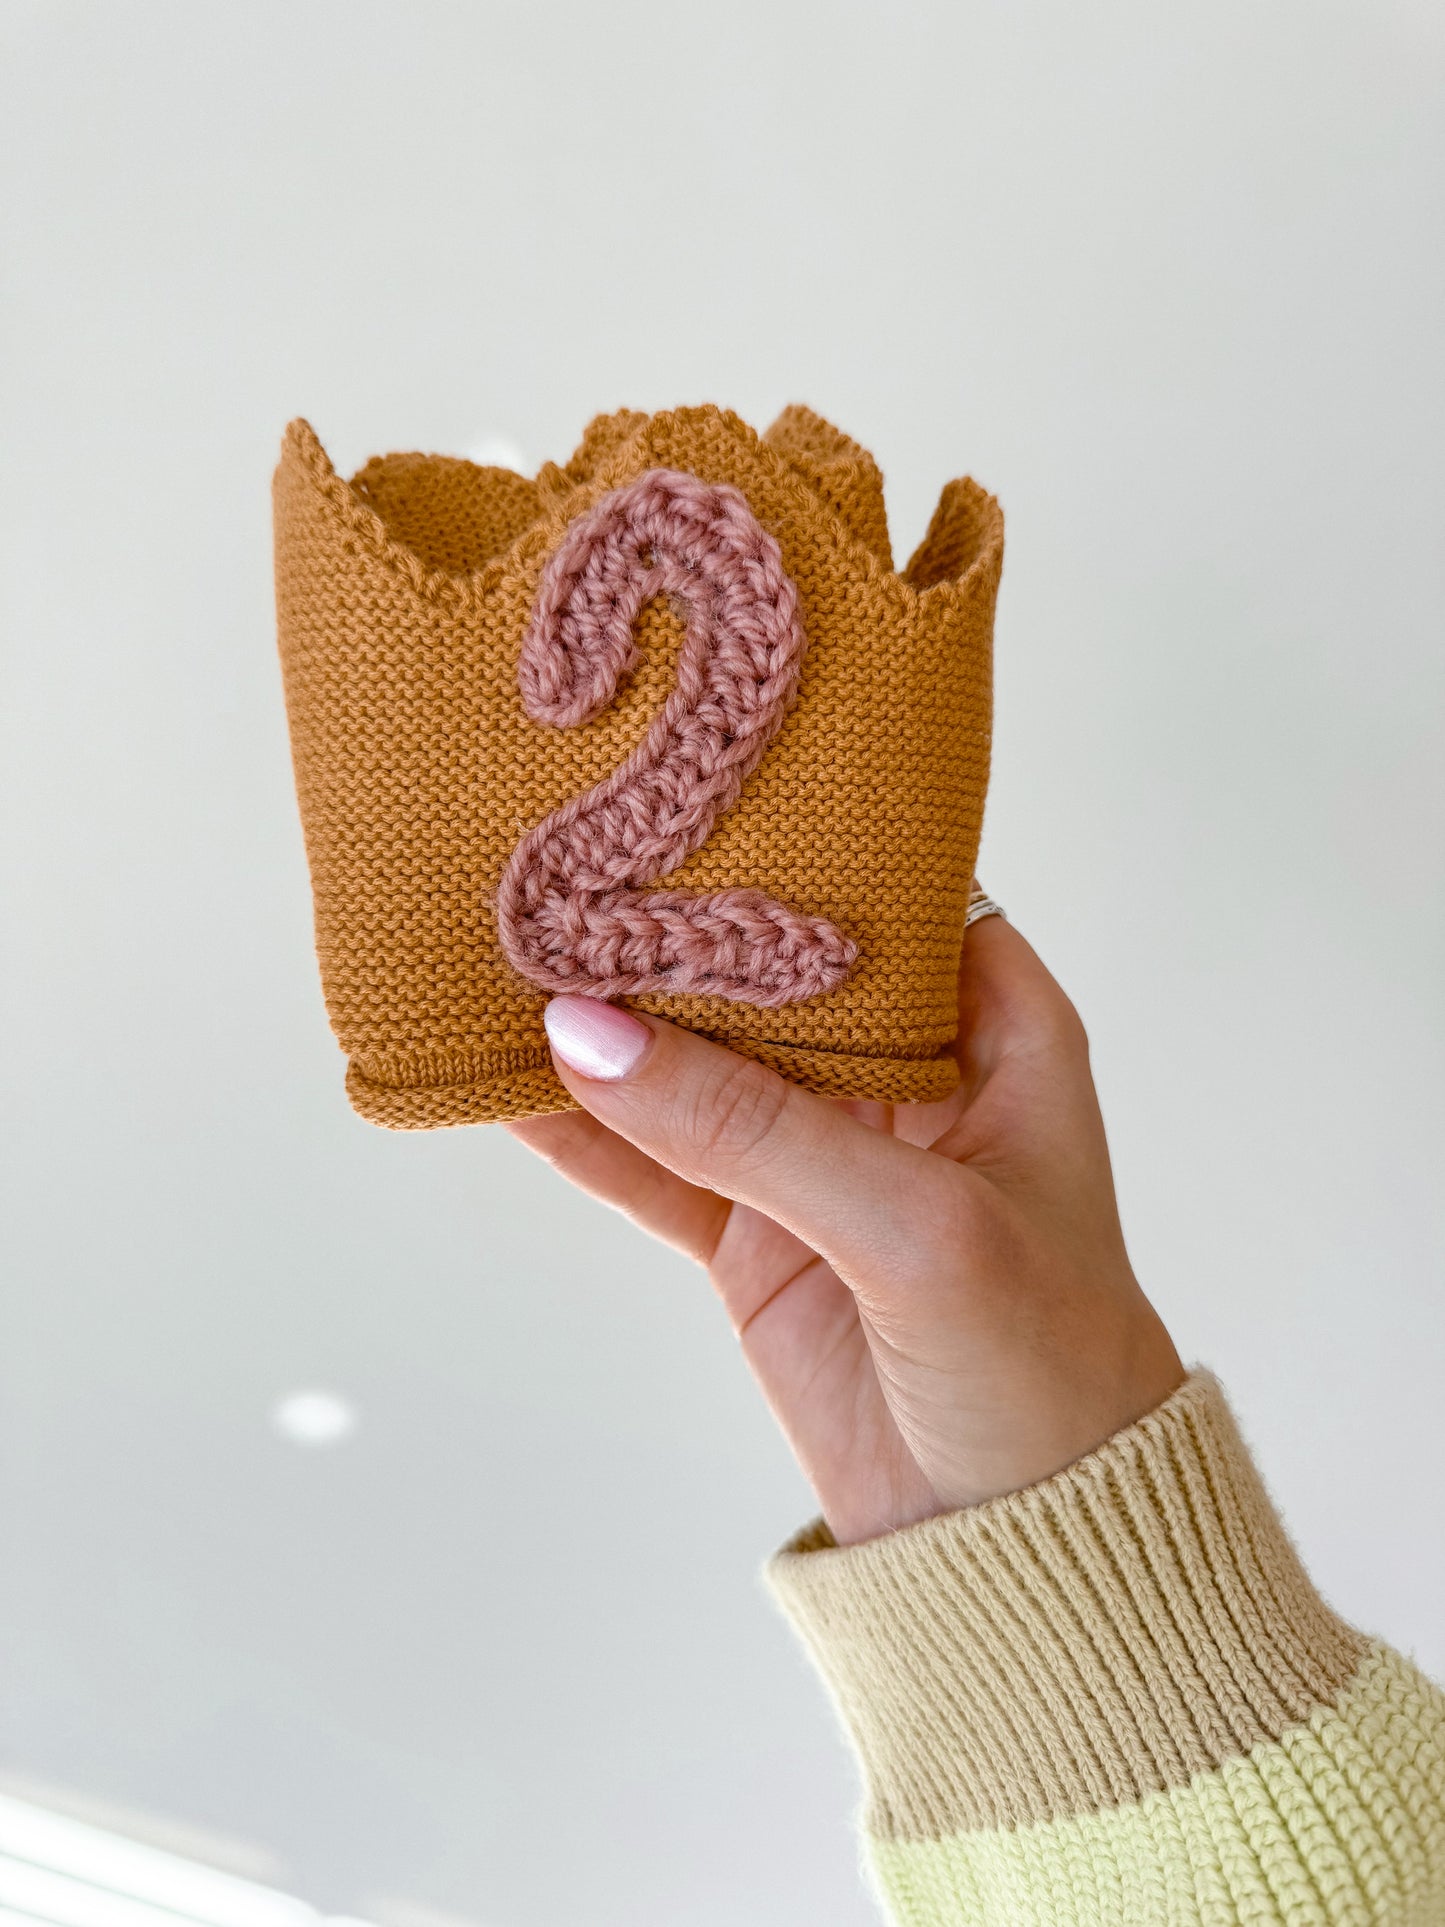 Birthday Crown with crochet appliqué